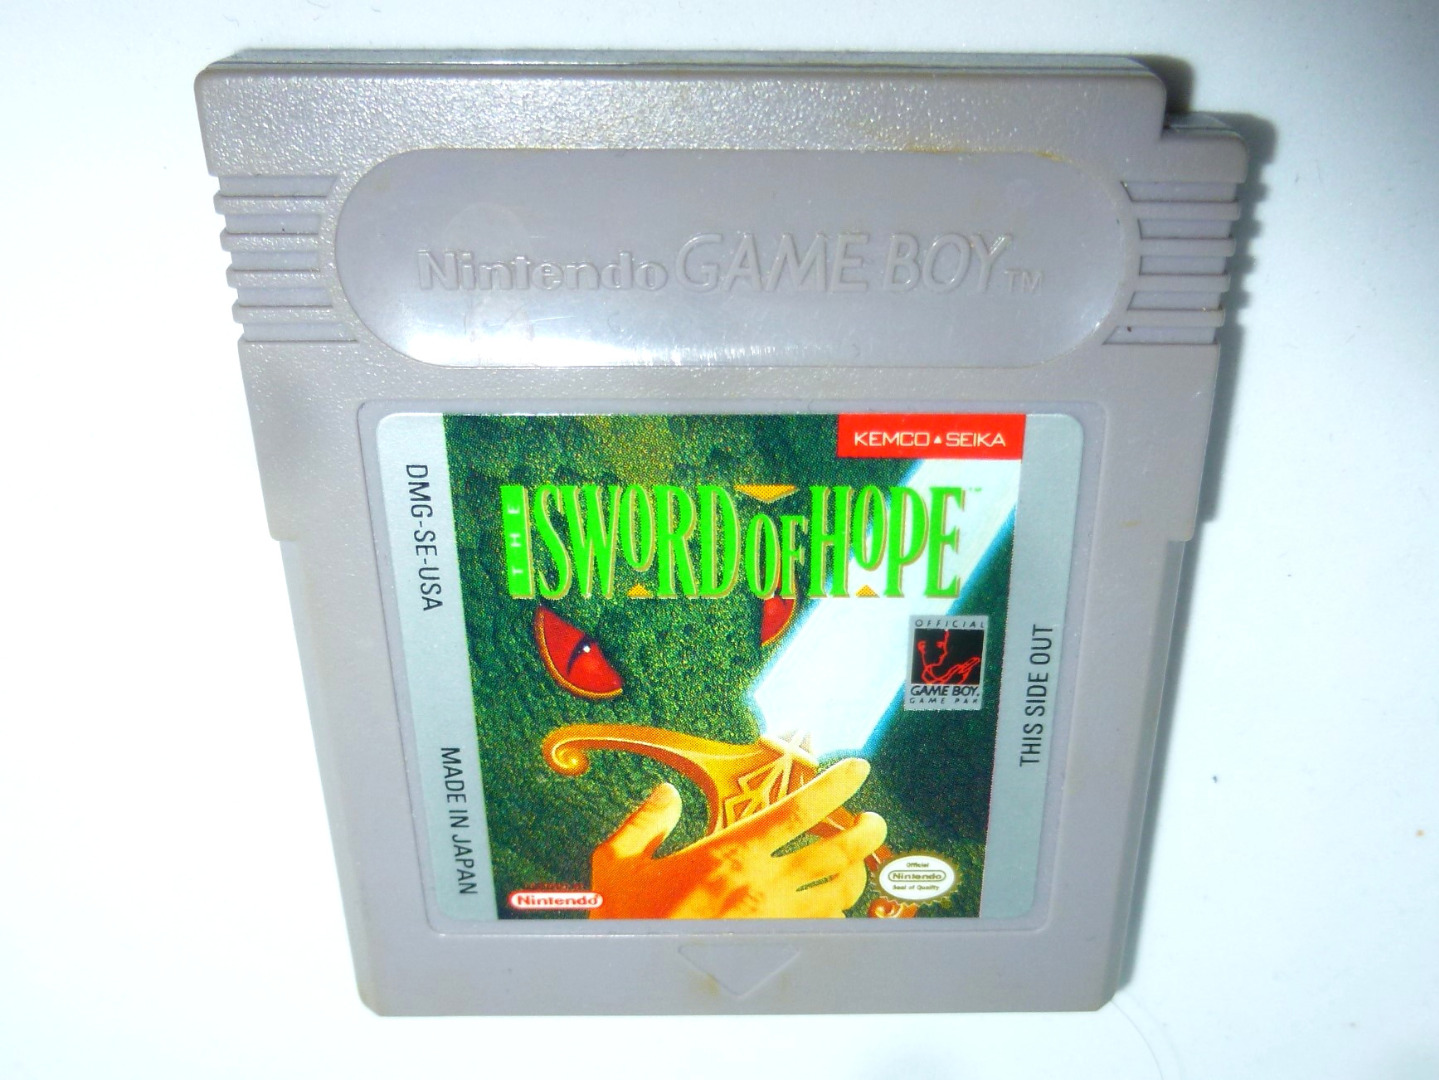 Nintendo Game Boy - The Sword of Hope